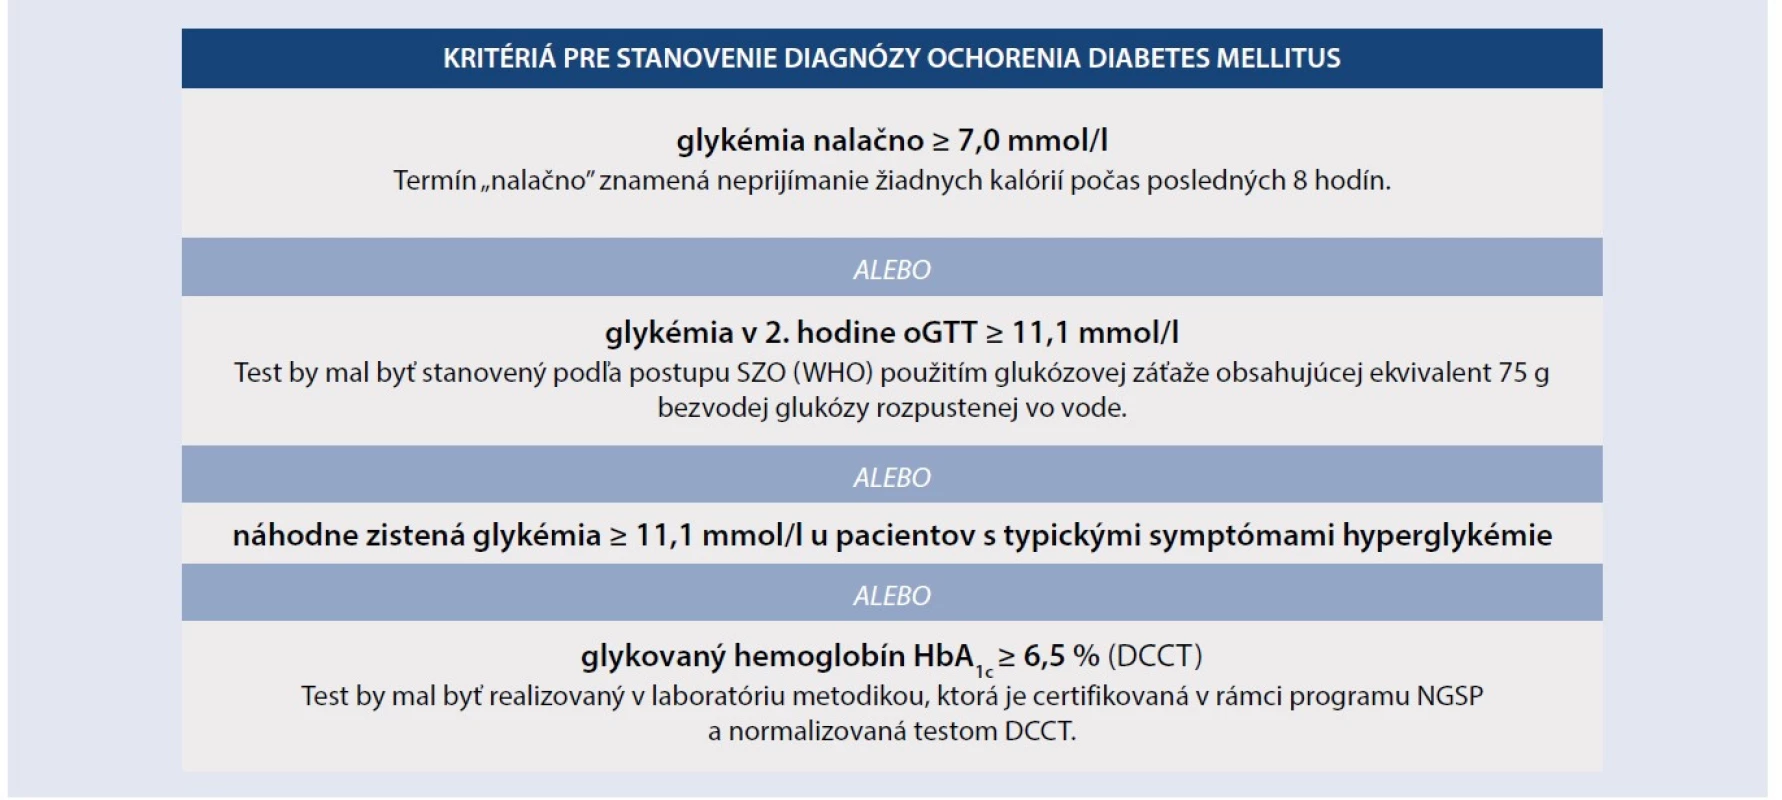 Kritéria na diagnostiku diabetes mellitus. Upravené podľa [11]